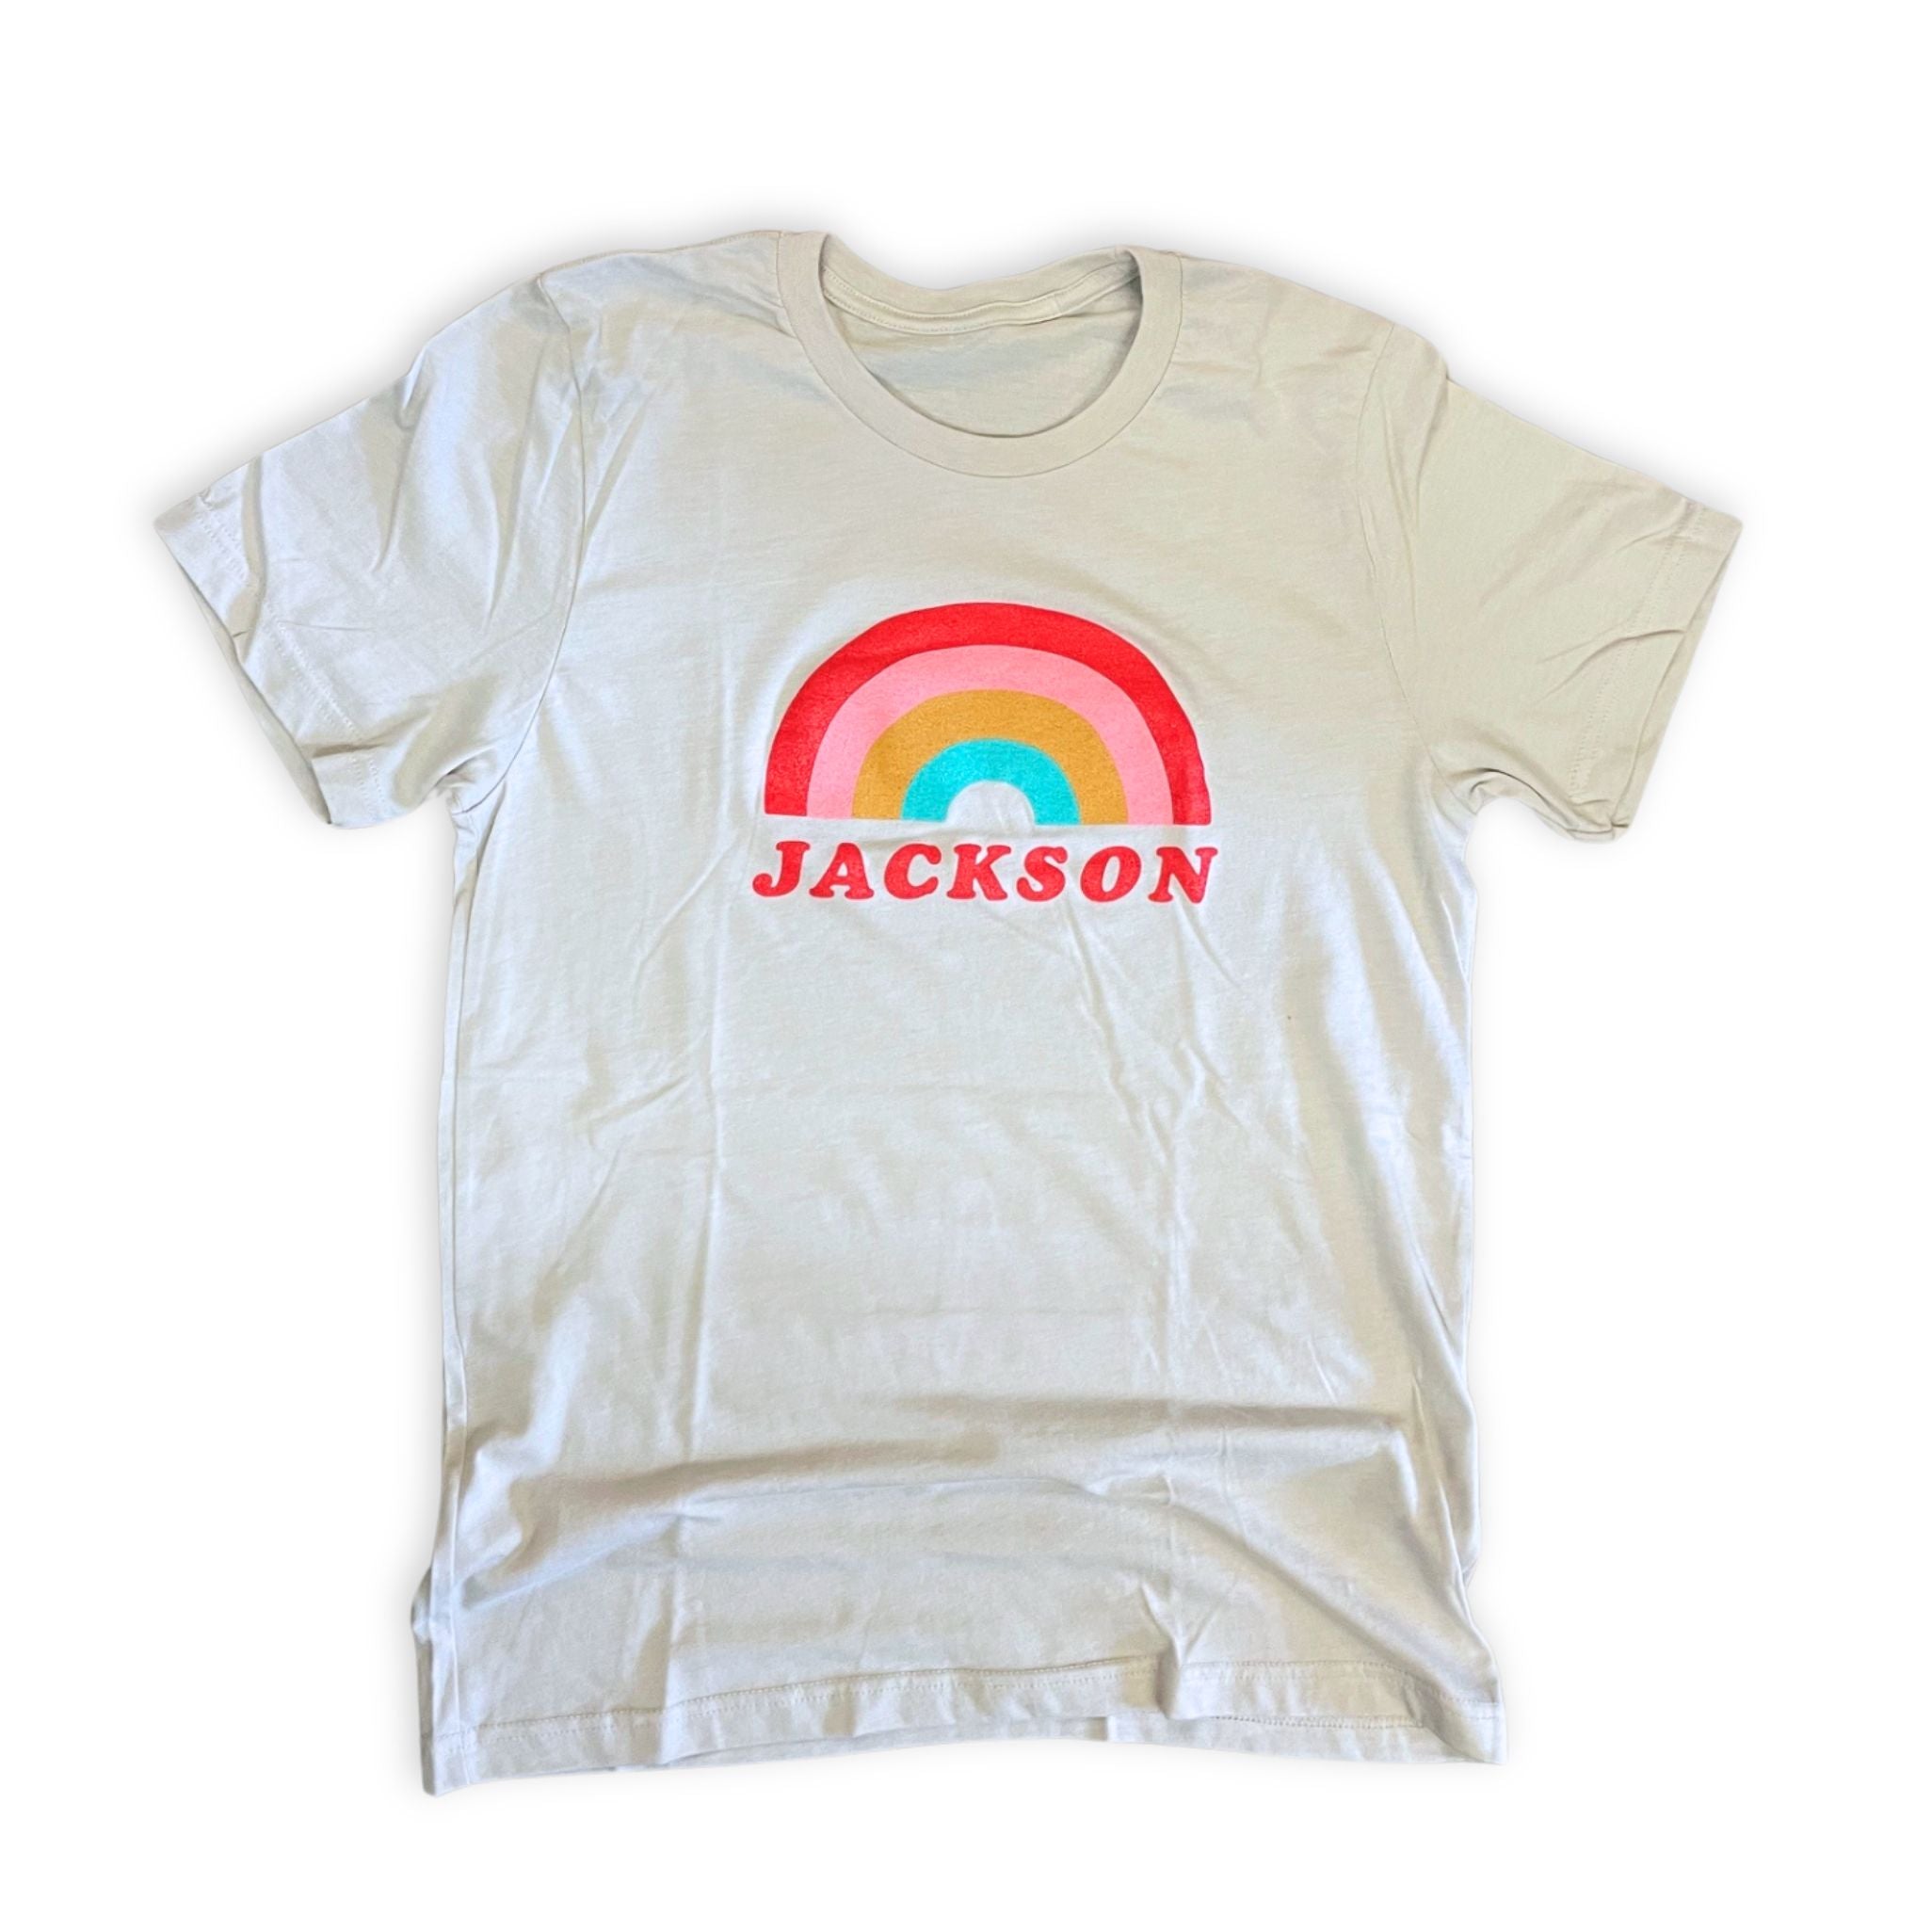 Jackson Rainbow Shirt